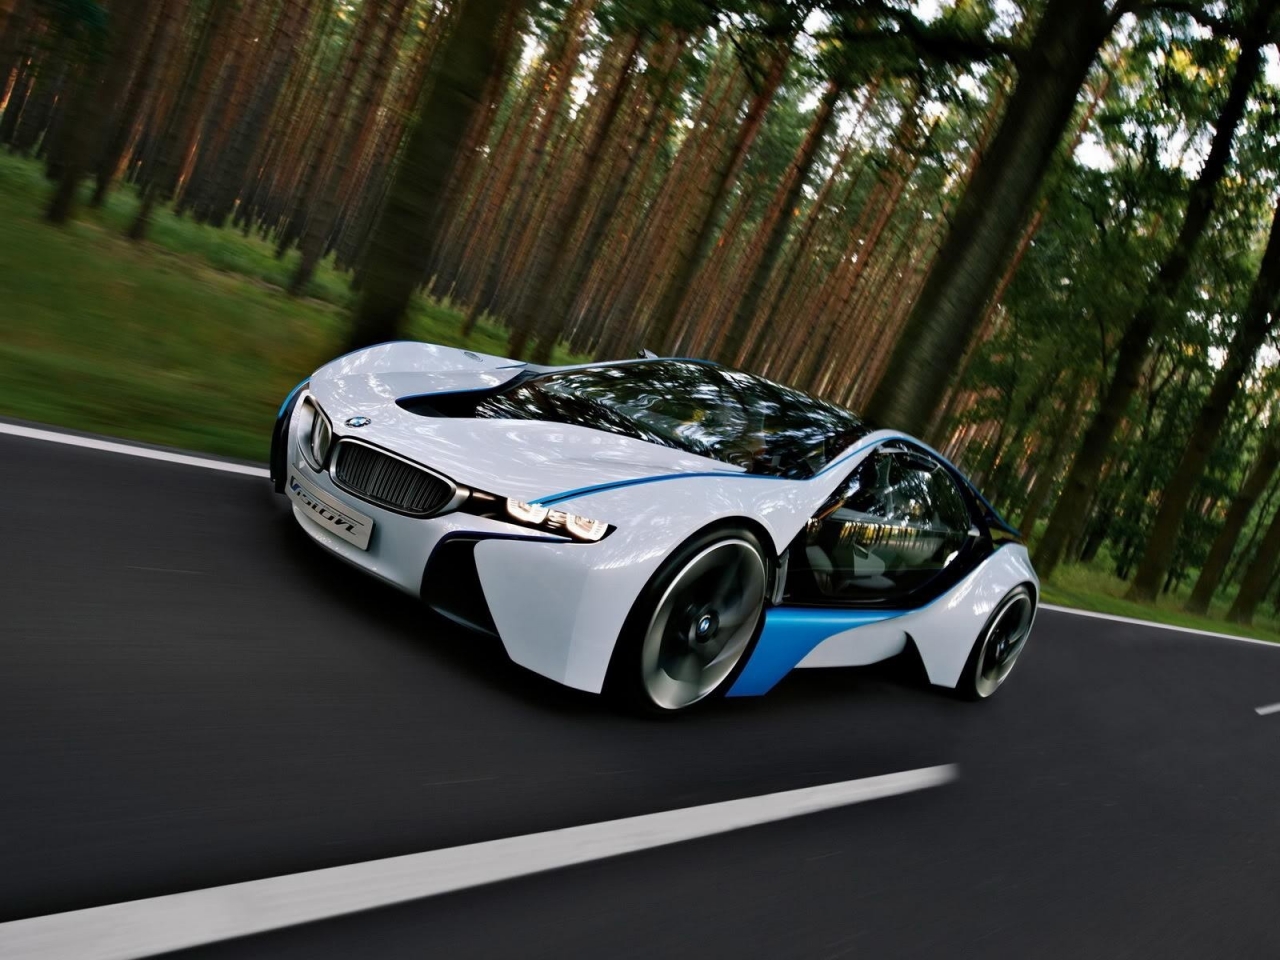 Superb BMW Vision Concept for 1280 x 960 resolution